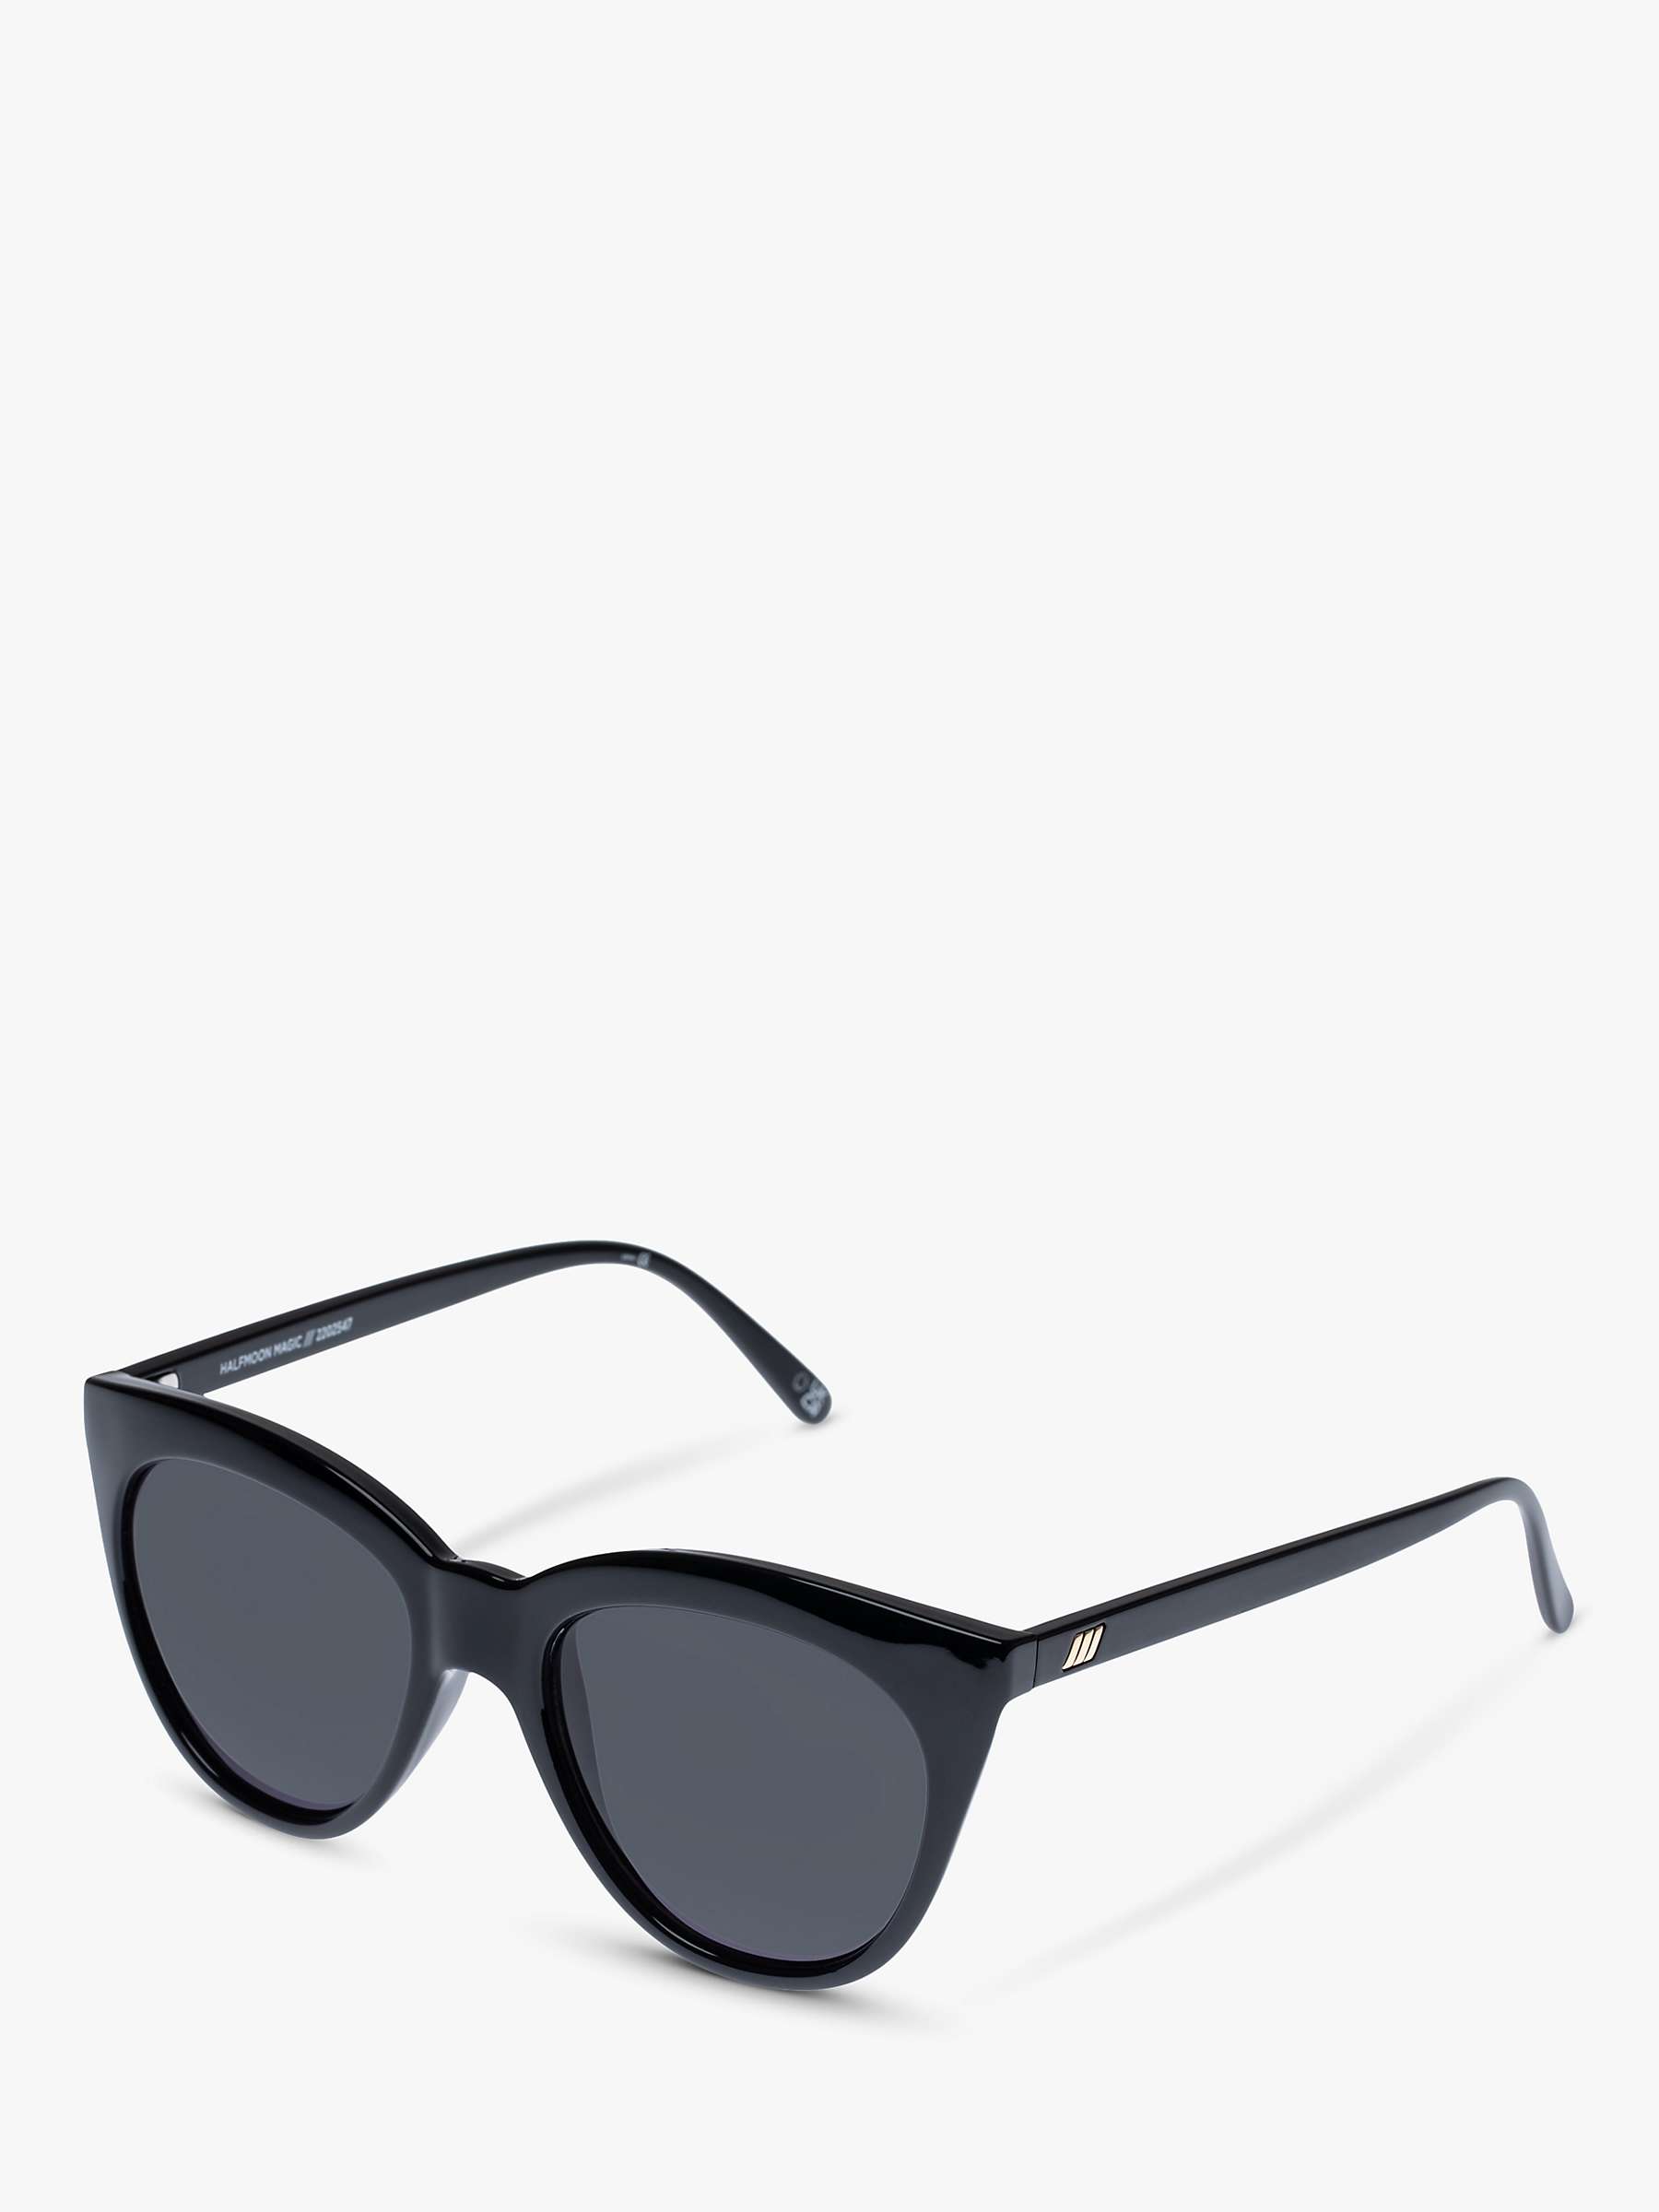 Buy Le Specs L5000168 Women's Half Moon Magic Cat's Eye Sunglasses, Black Online at johnlewis.com